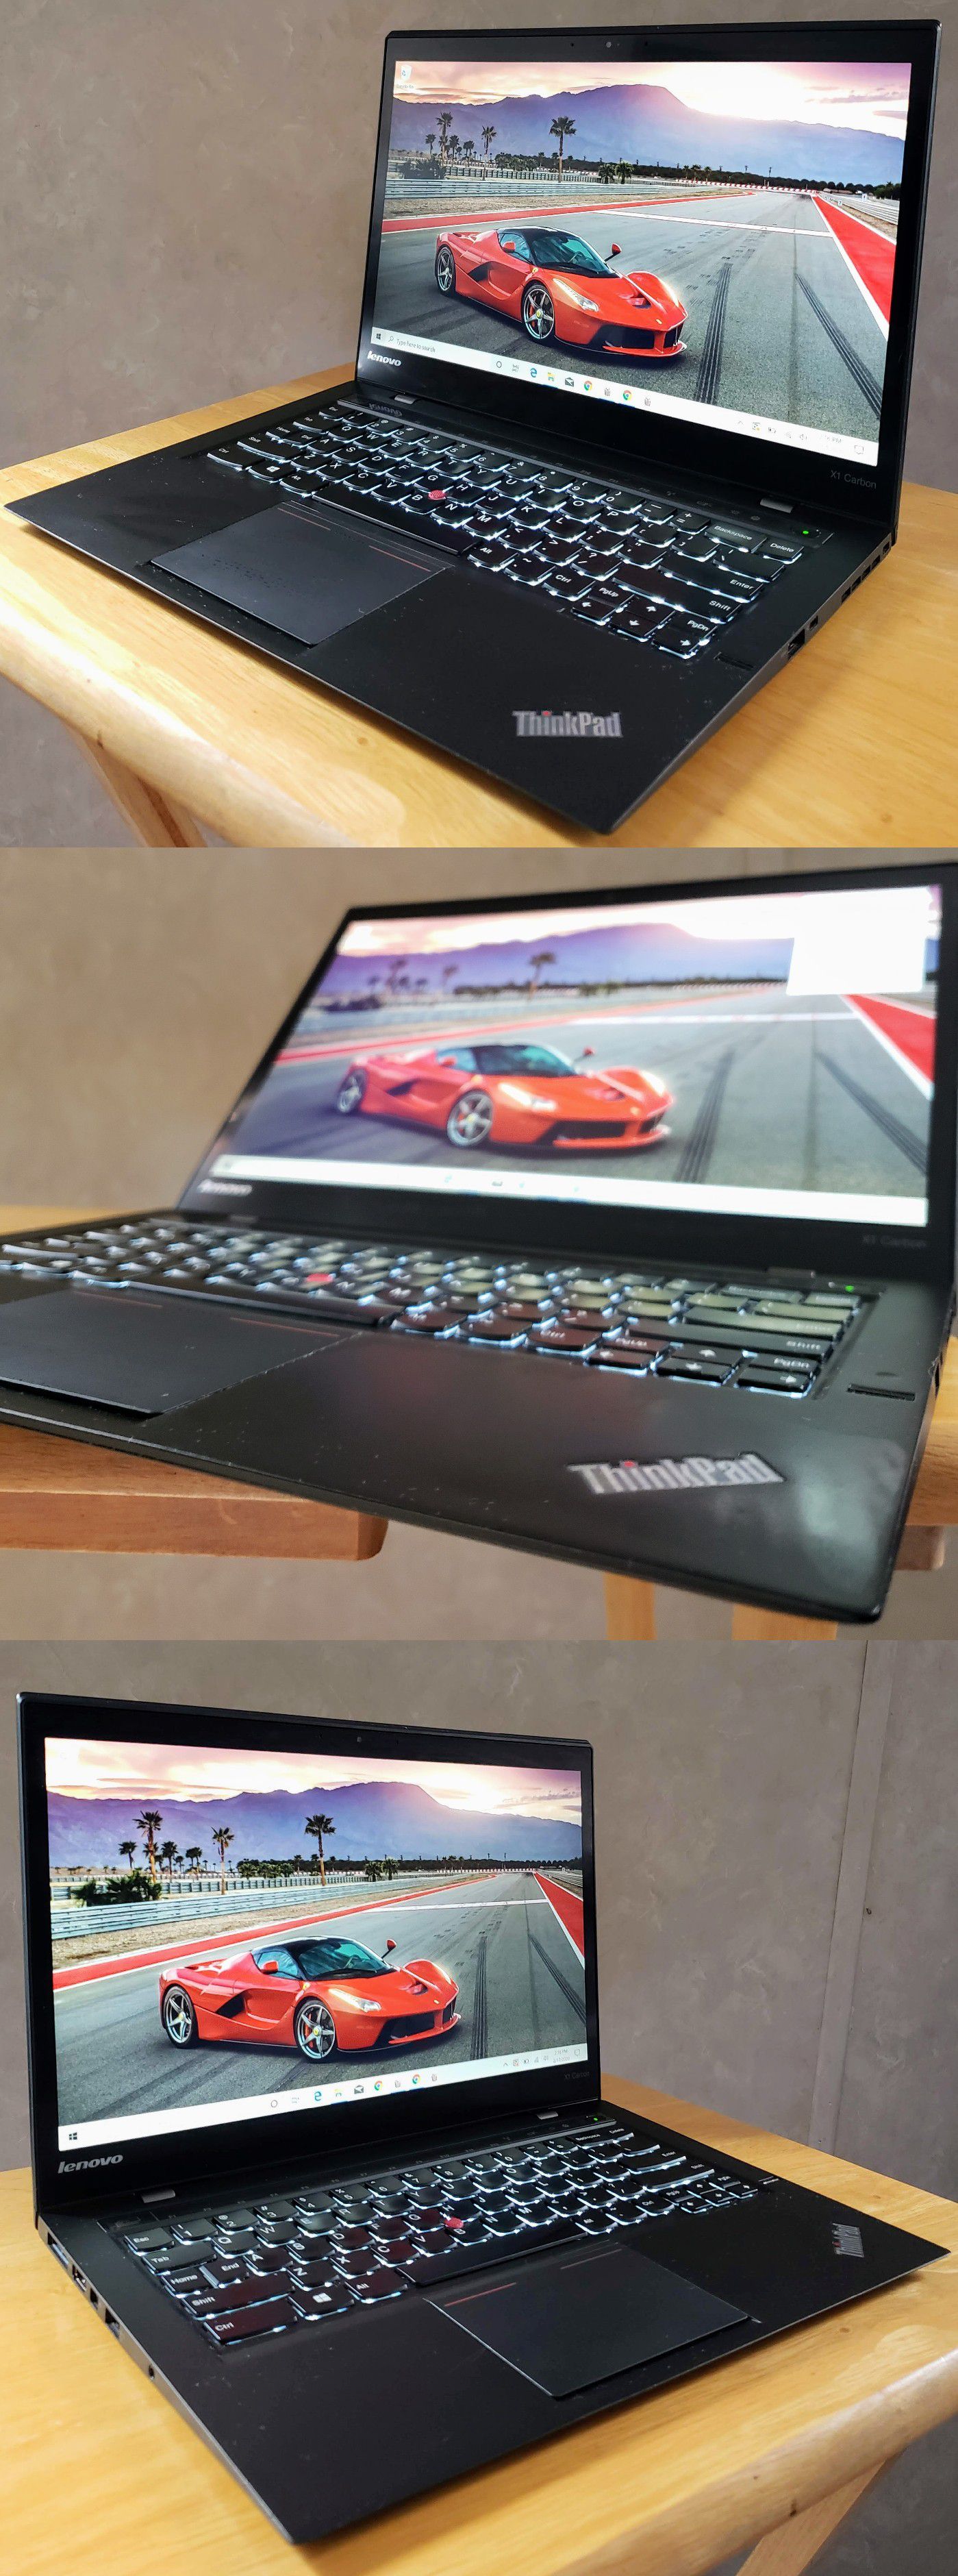 Lenovo X1 Carbon Ultrabook Touchscreen Laptop i7 SSD Windows 10 Pro Photoshop